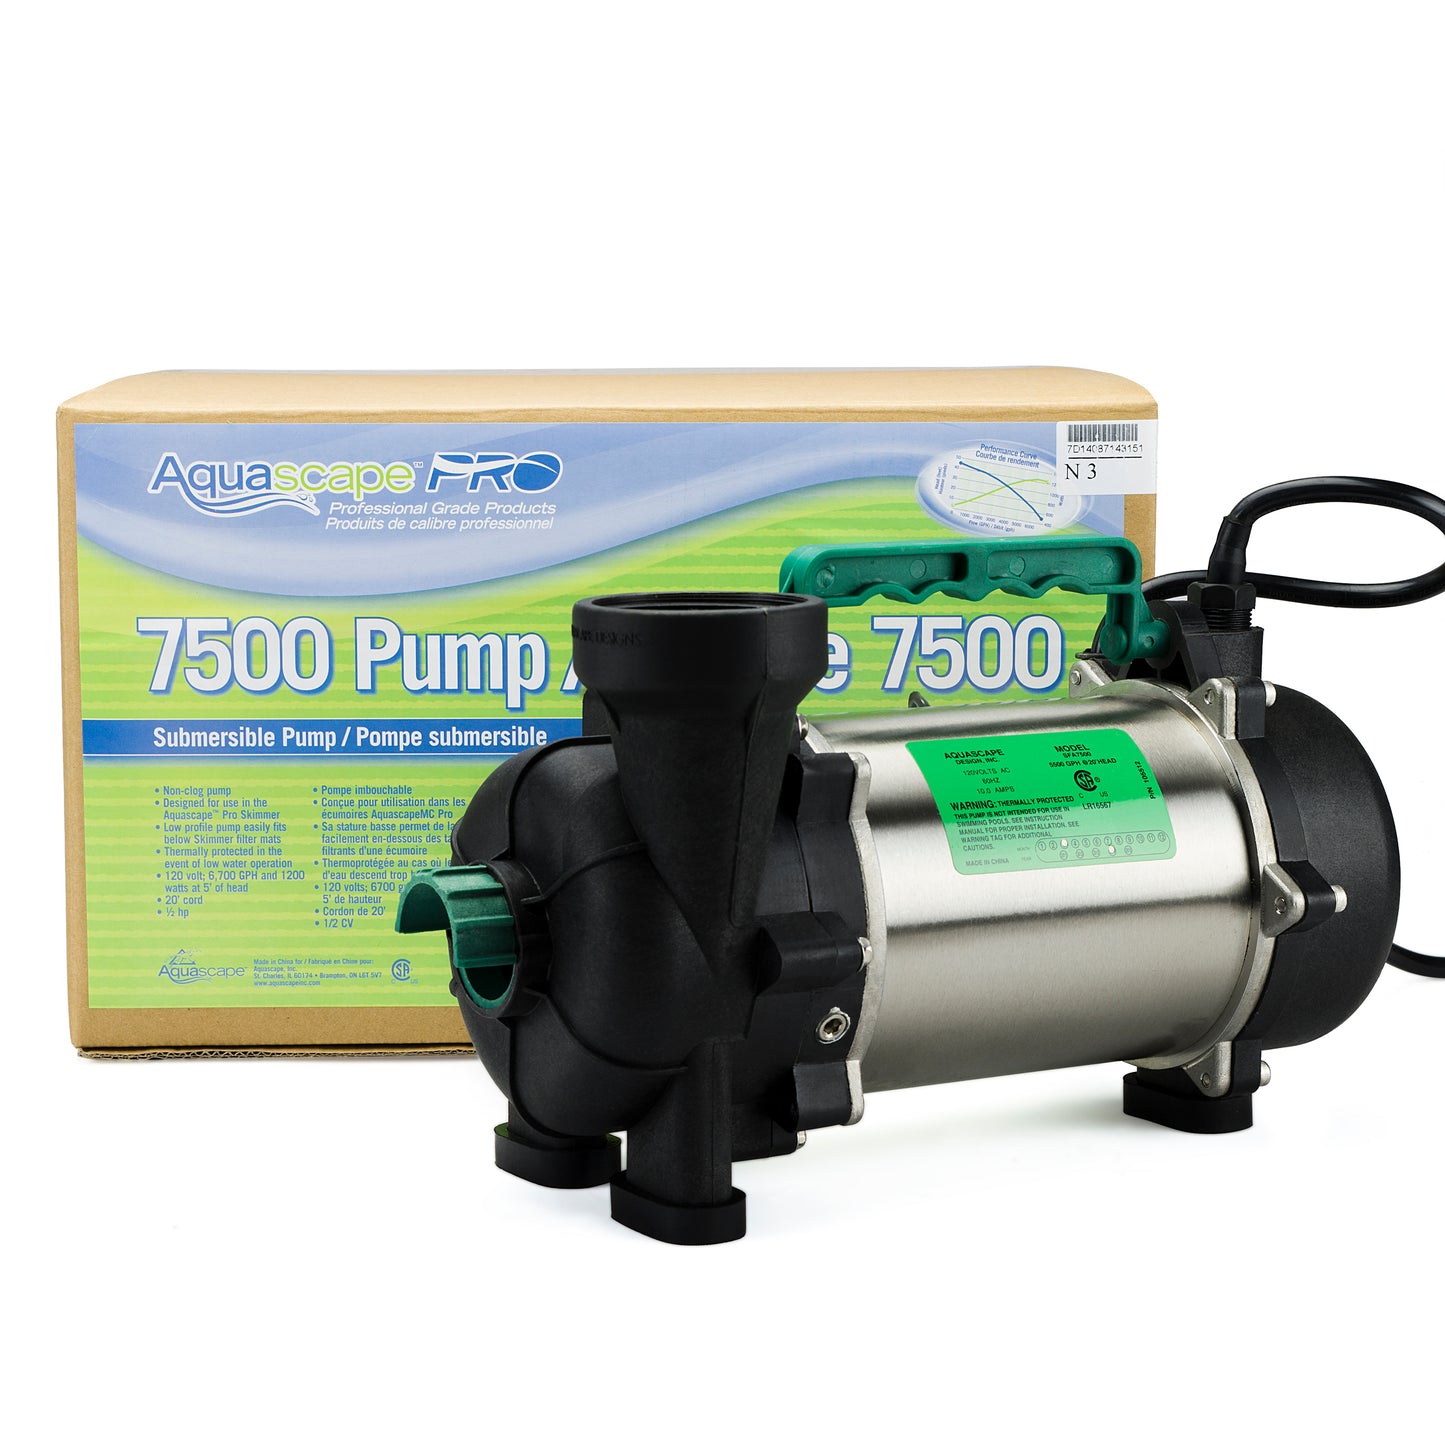 AquascapePRO 7500 Pond Pump